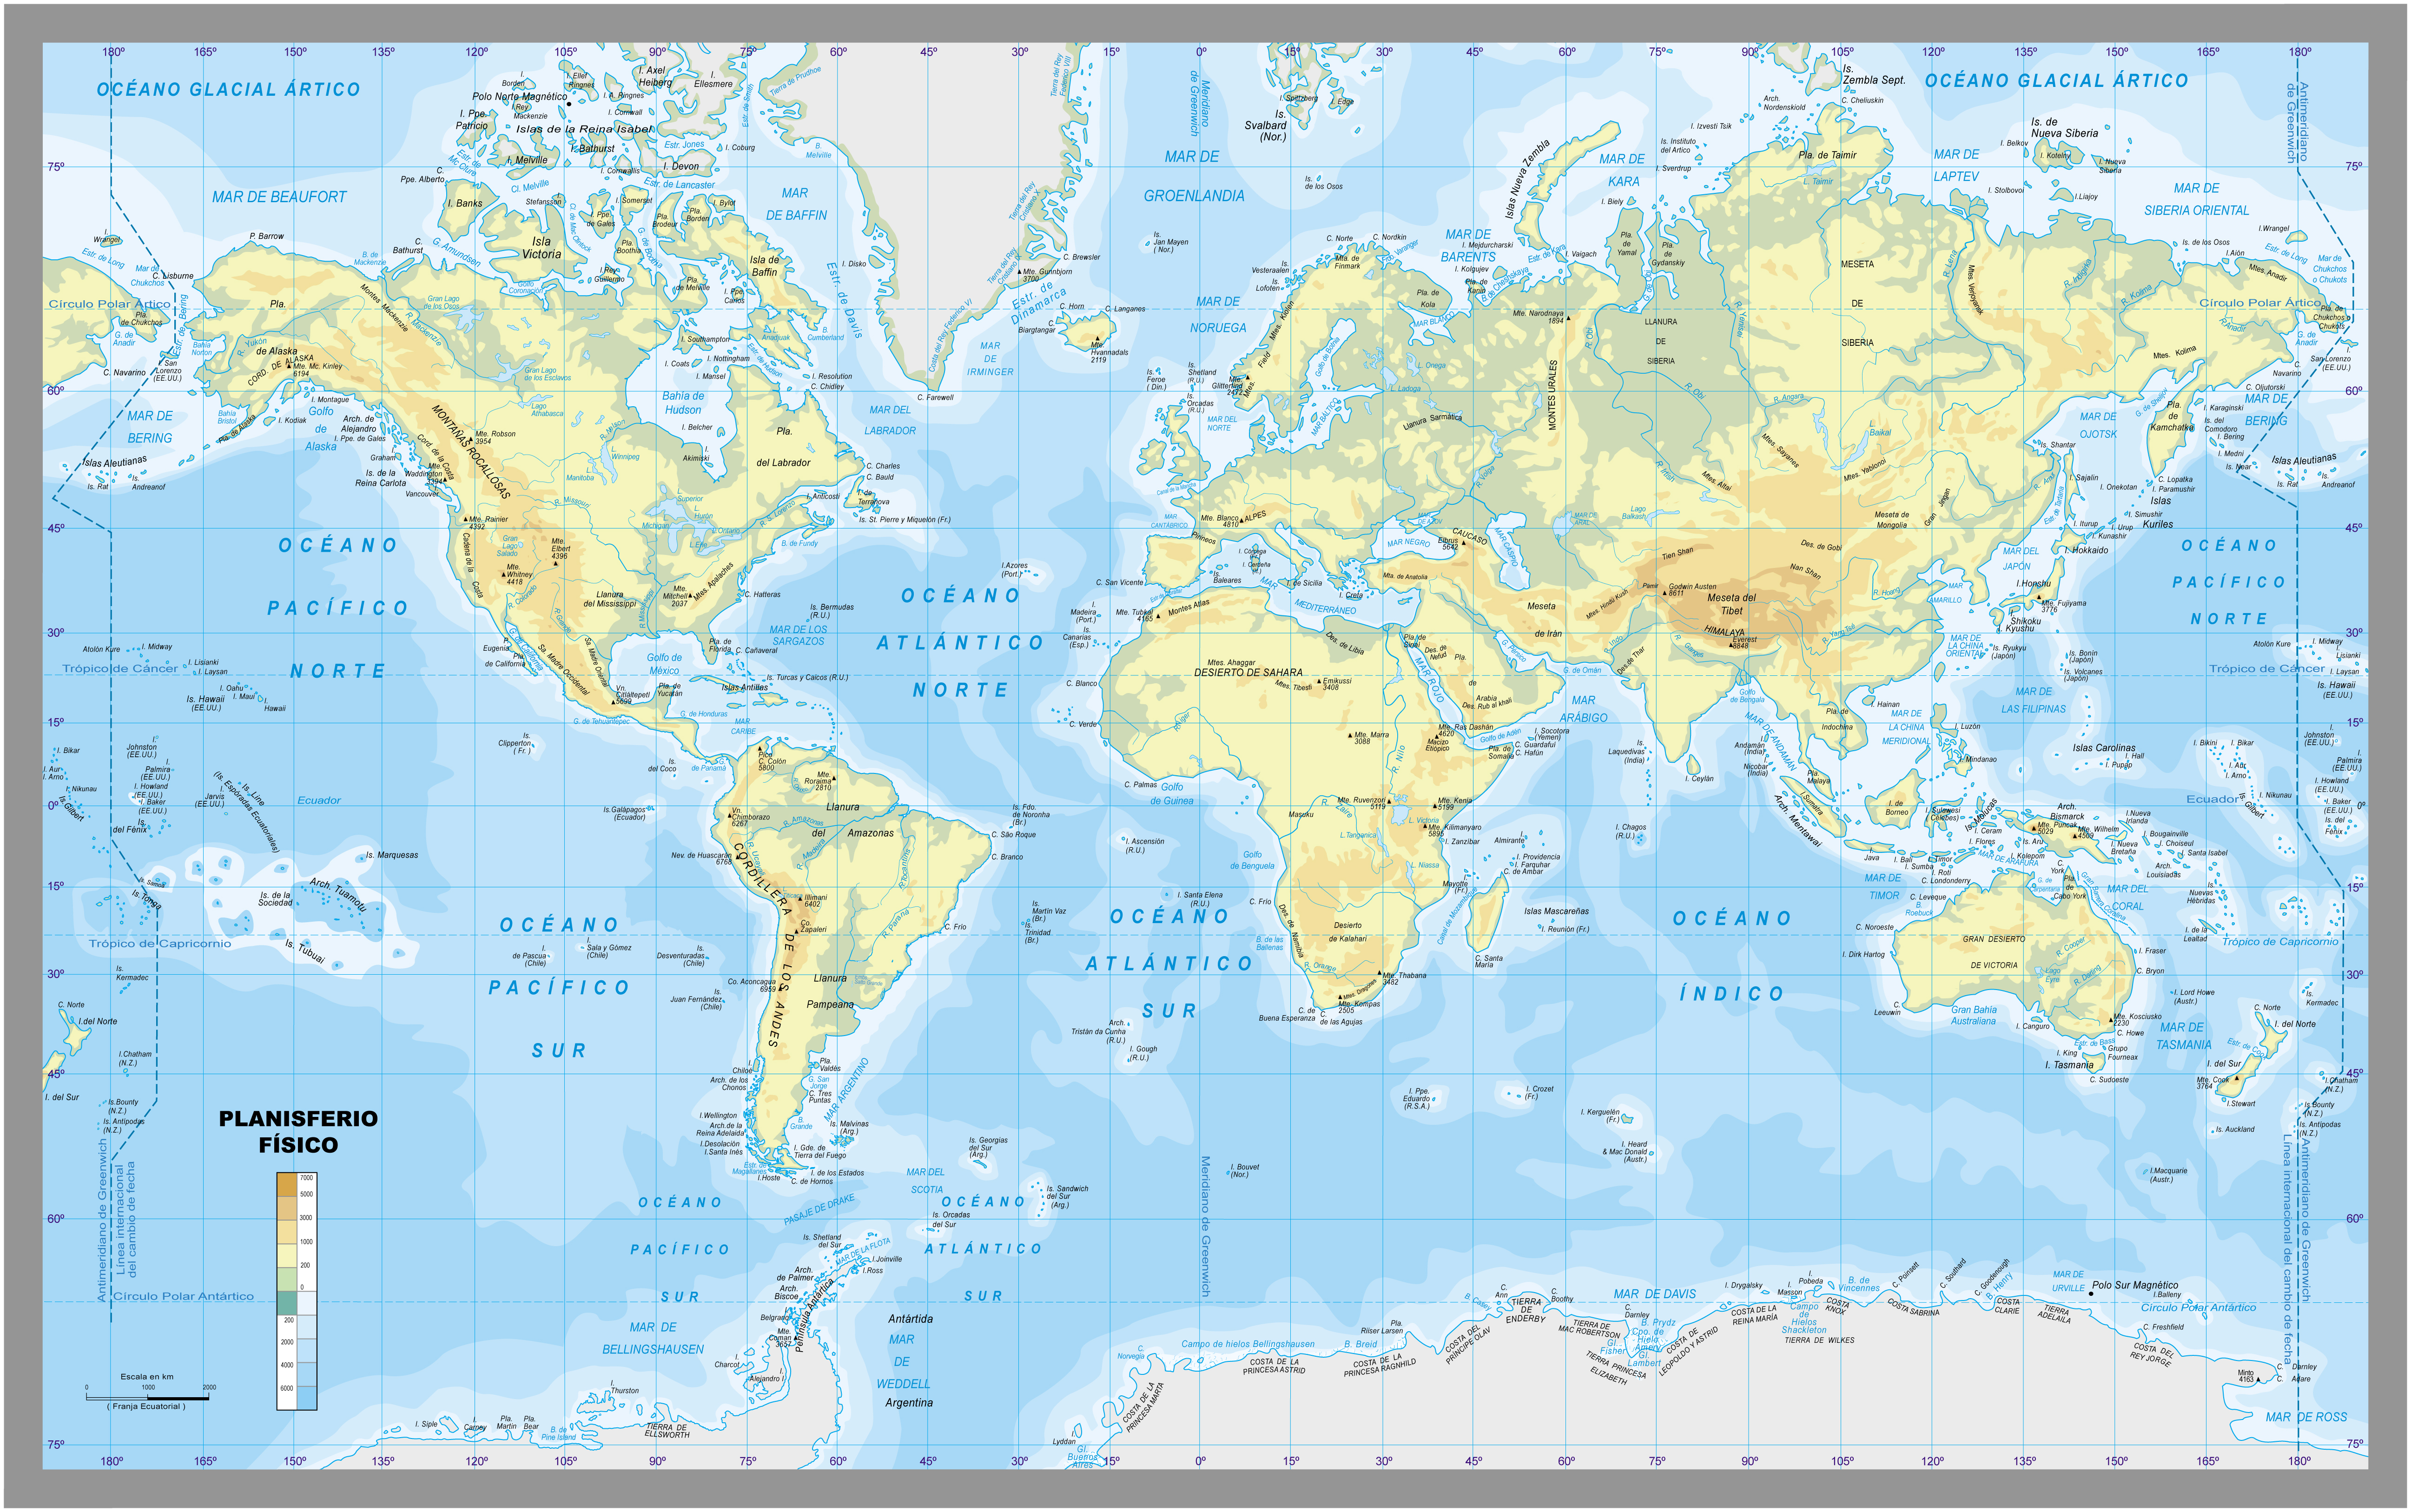 Mapa Planisferio Fisico Politico Para Imprimir Gratis Kulturaupice